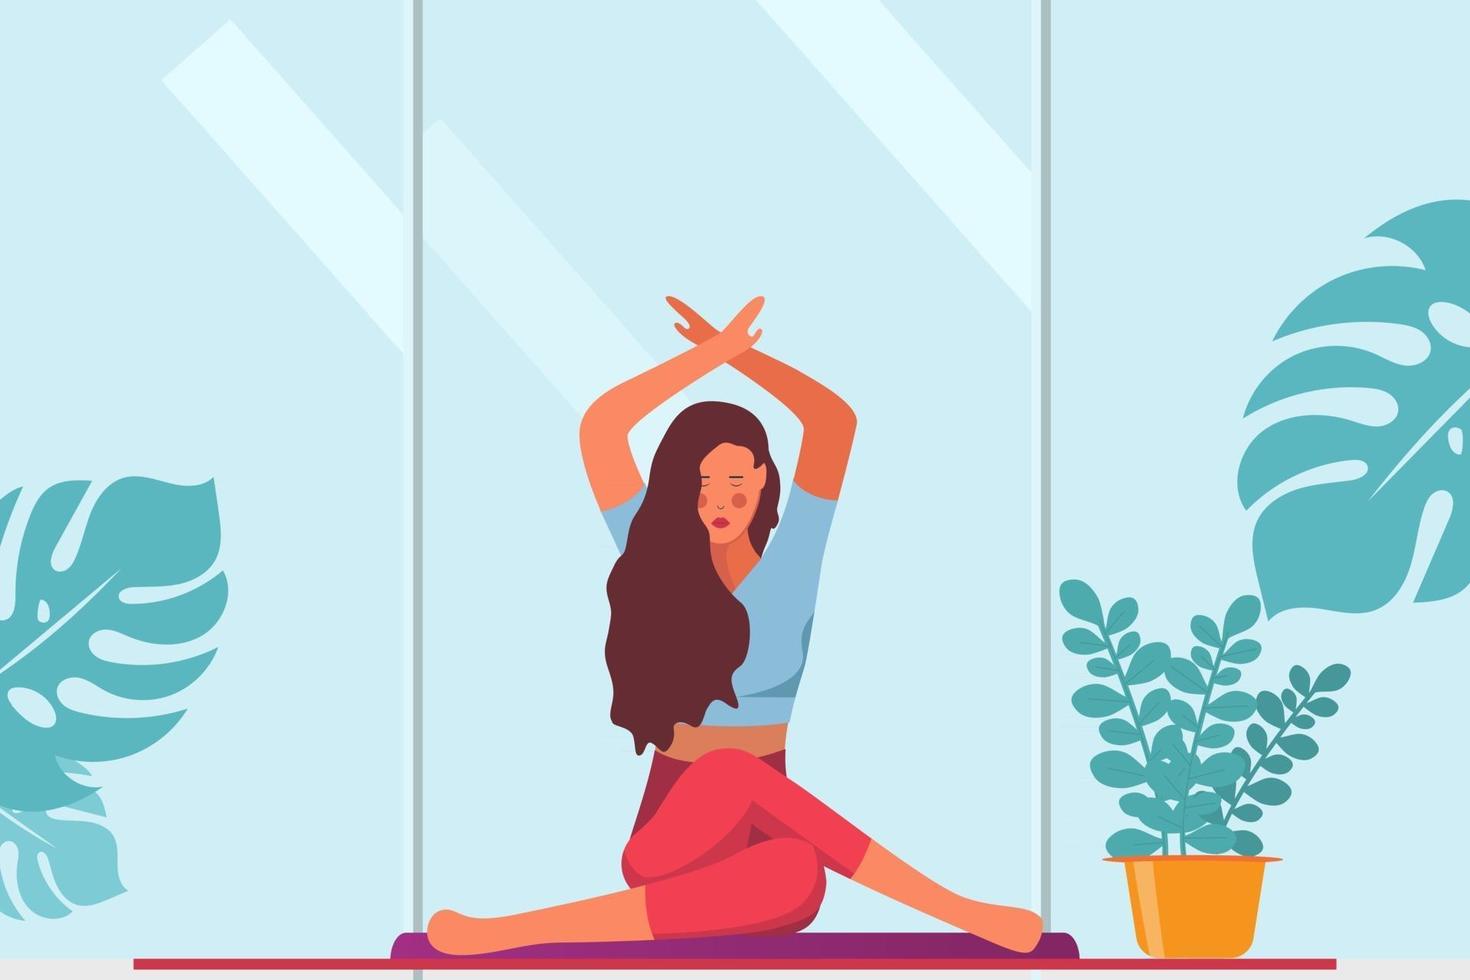 Woman meditating on floor. Concept illustration for yoga, meditation, healthy lifestyle. Vector illustration in flat cartoon style